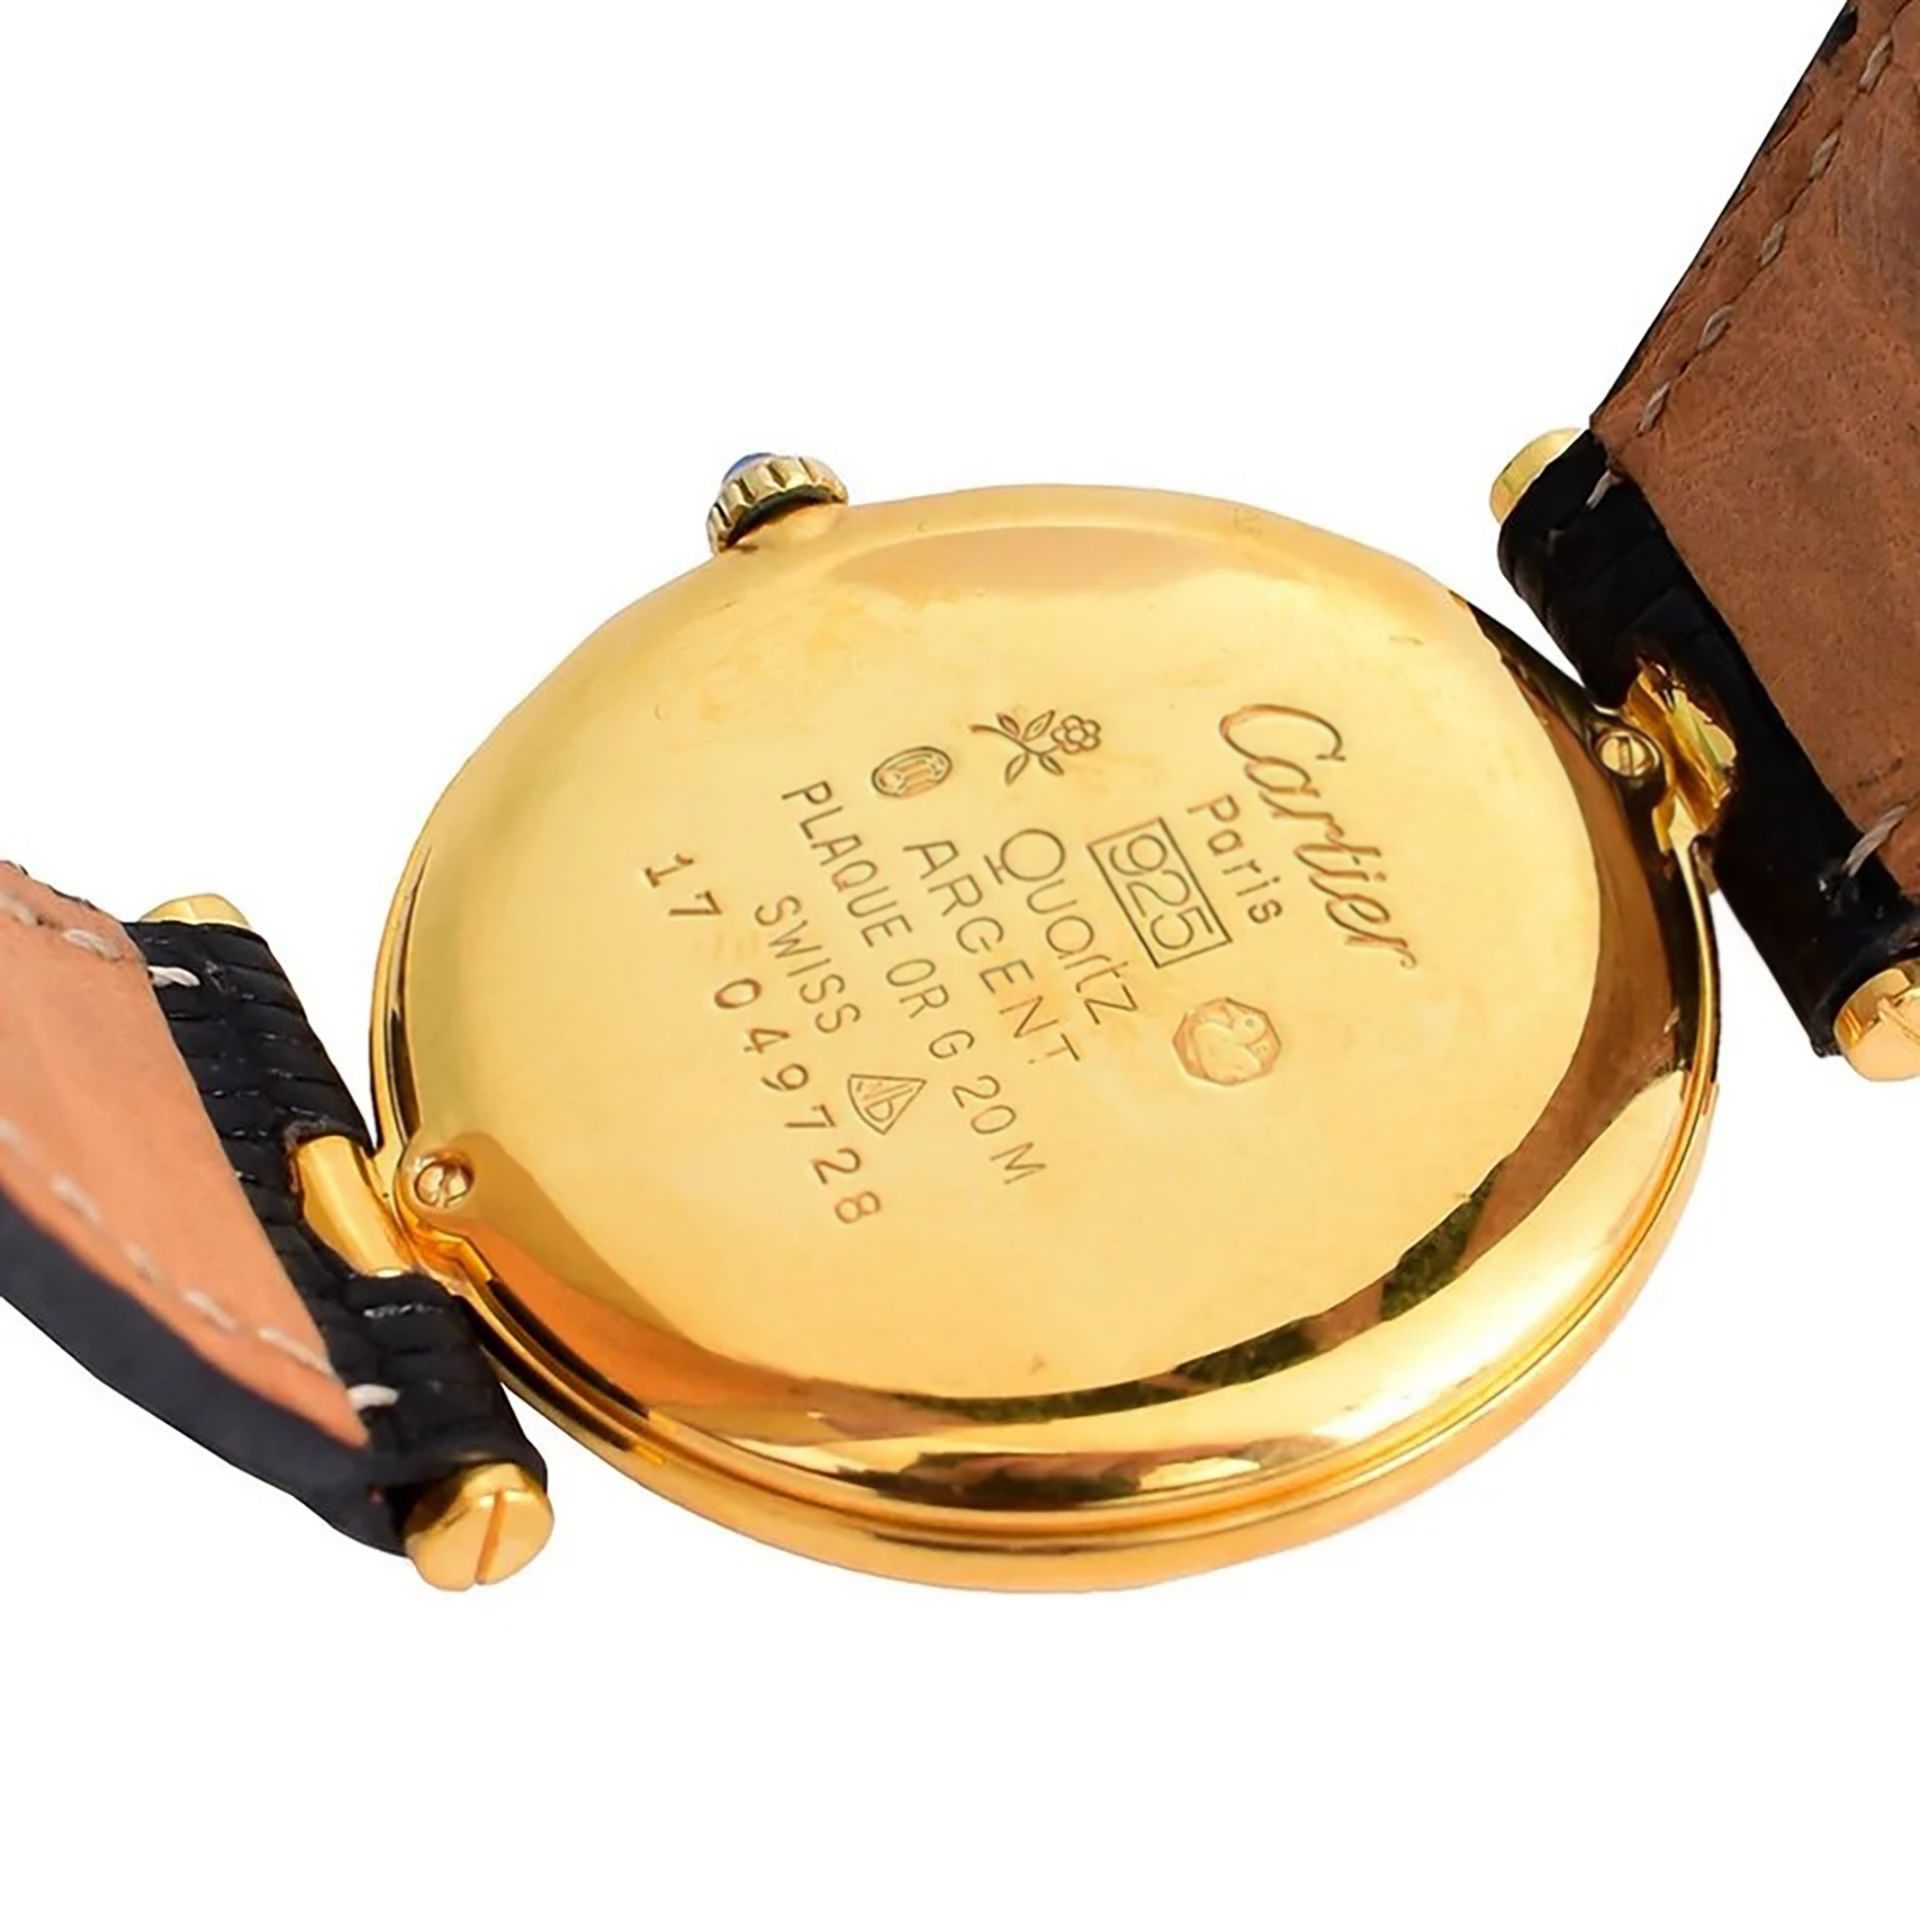 Cartier Vermeil Must wristwatch - Image 4 of 6